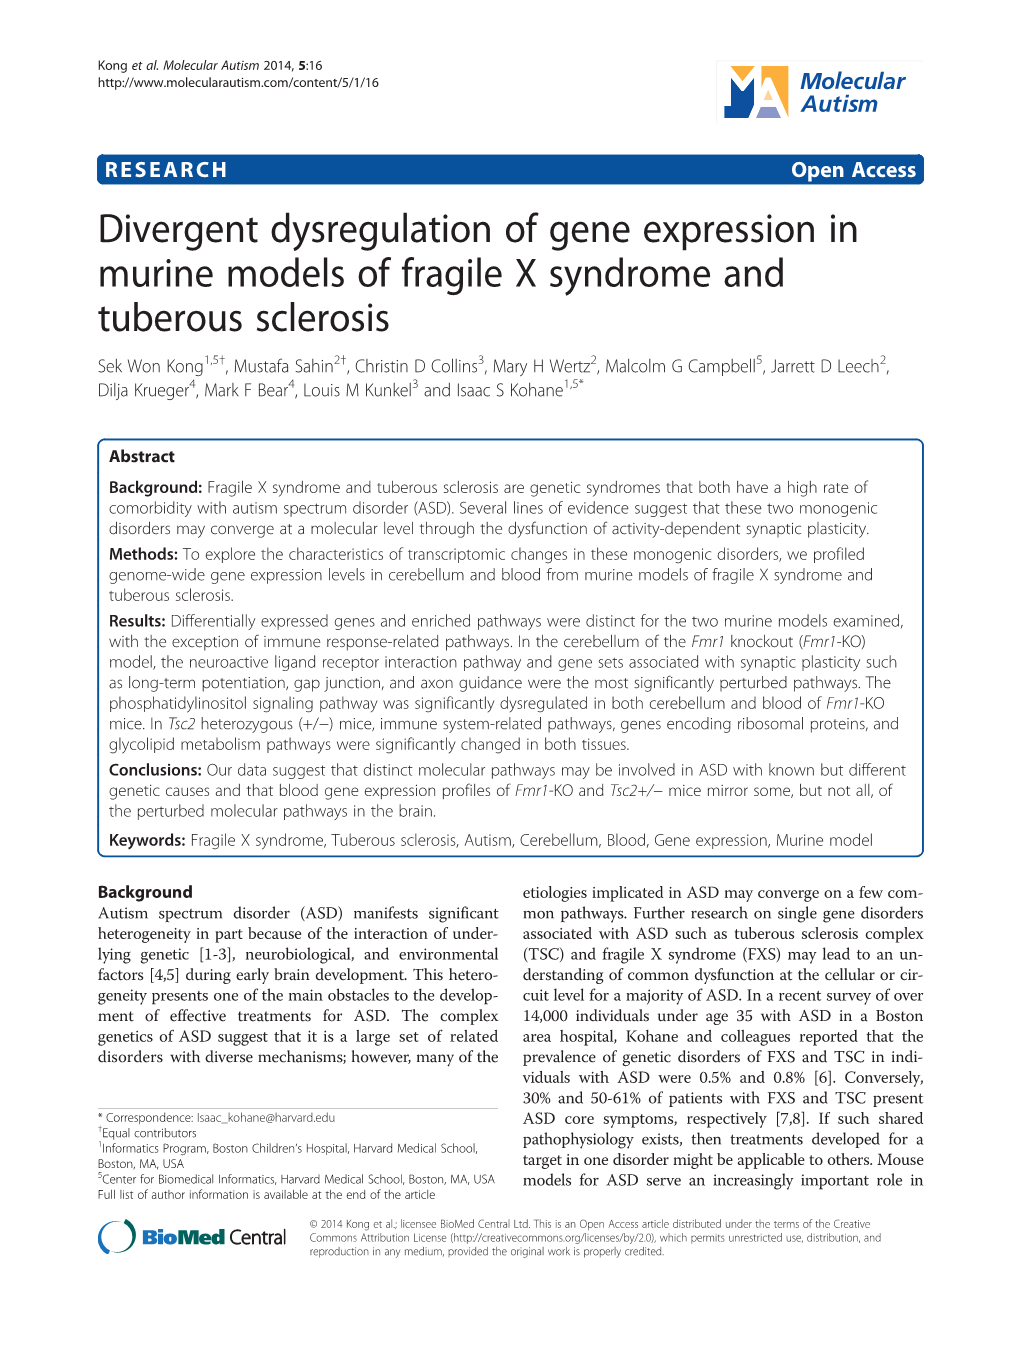 Divergent Dysregulation of Gene Expression in Murine Models Of